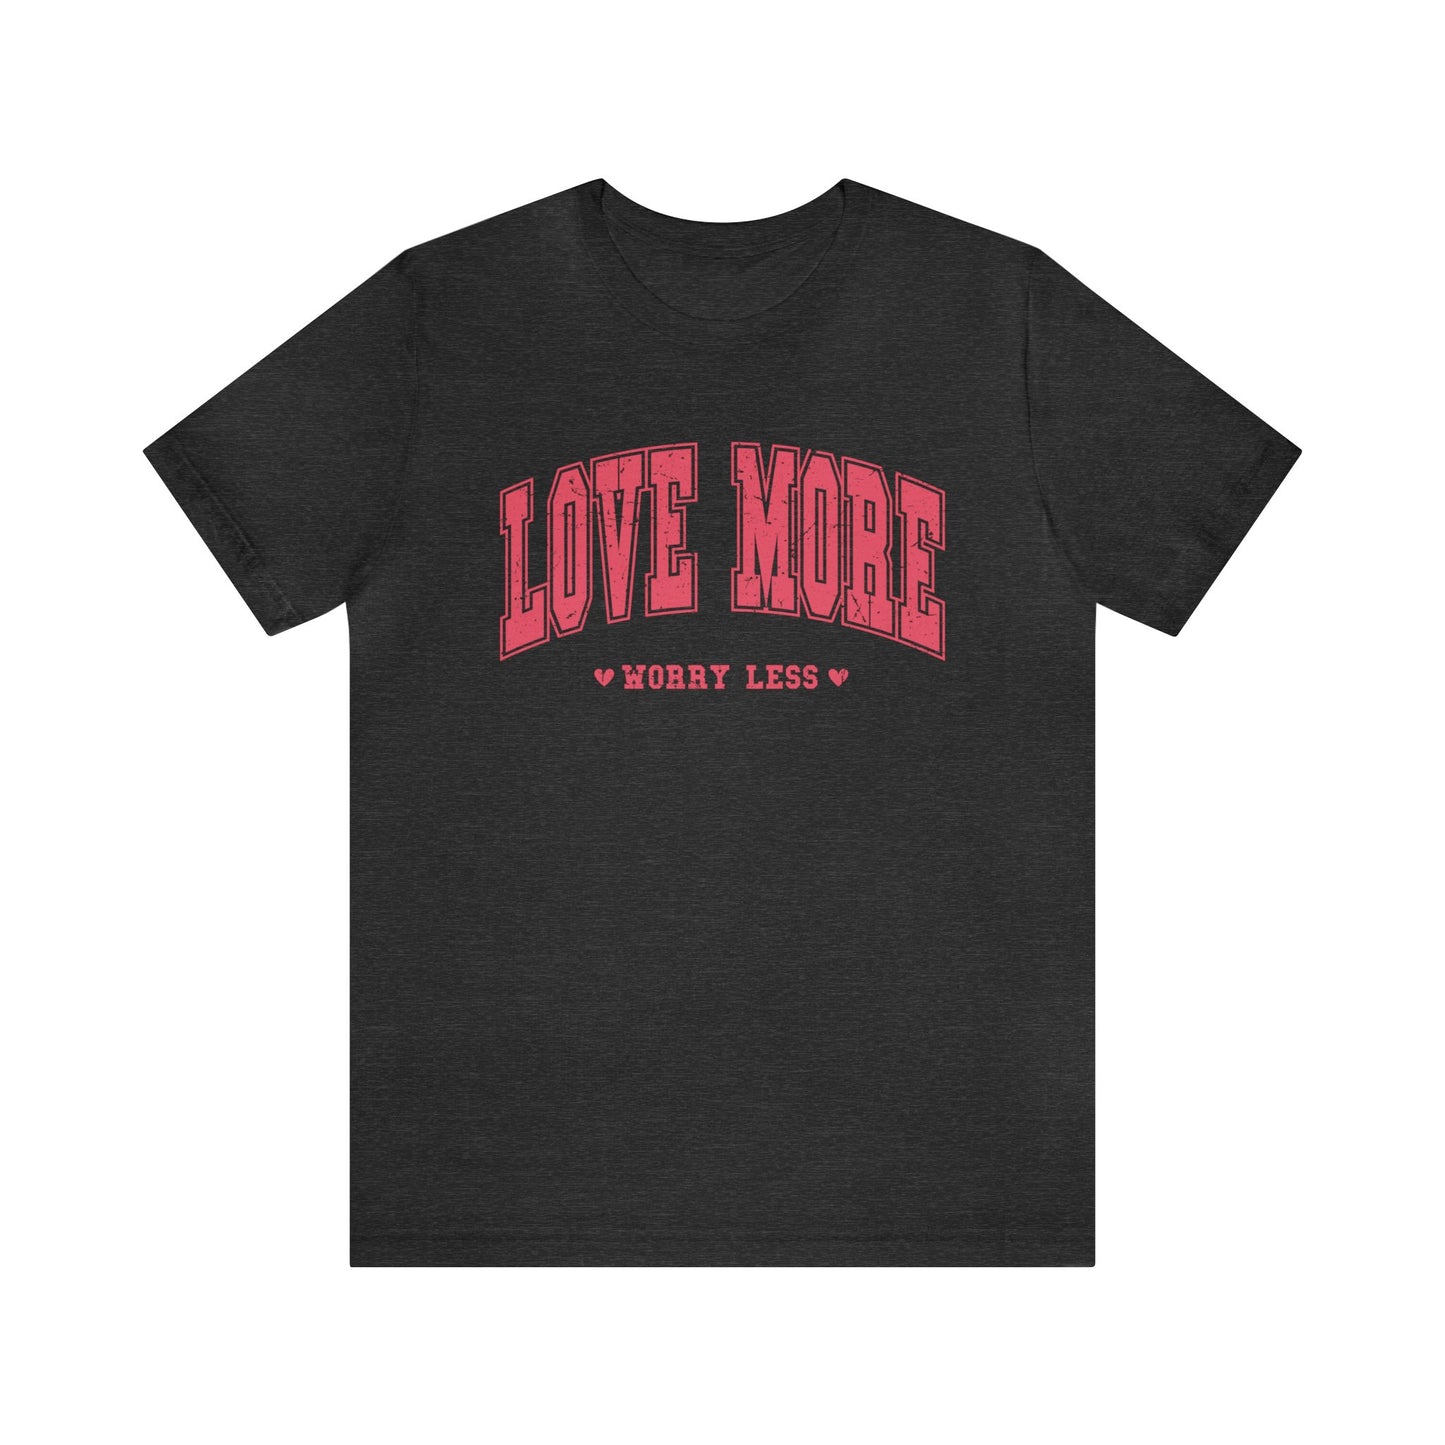 Love More Worry Less Women's Tshirt